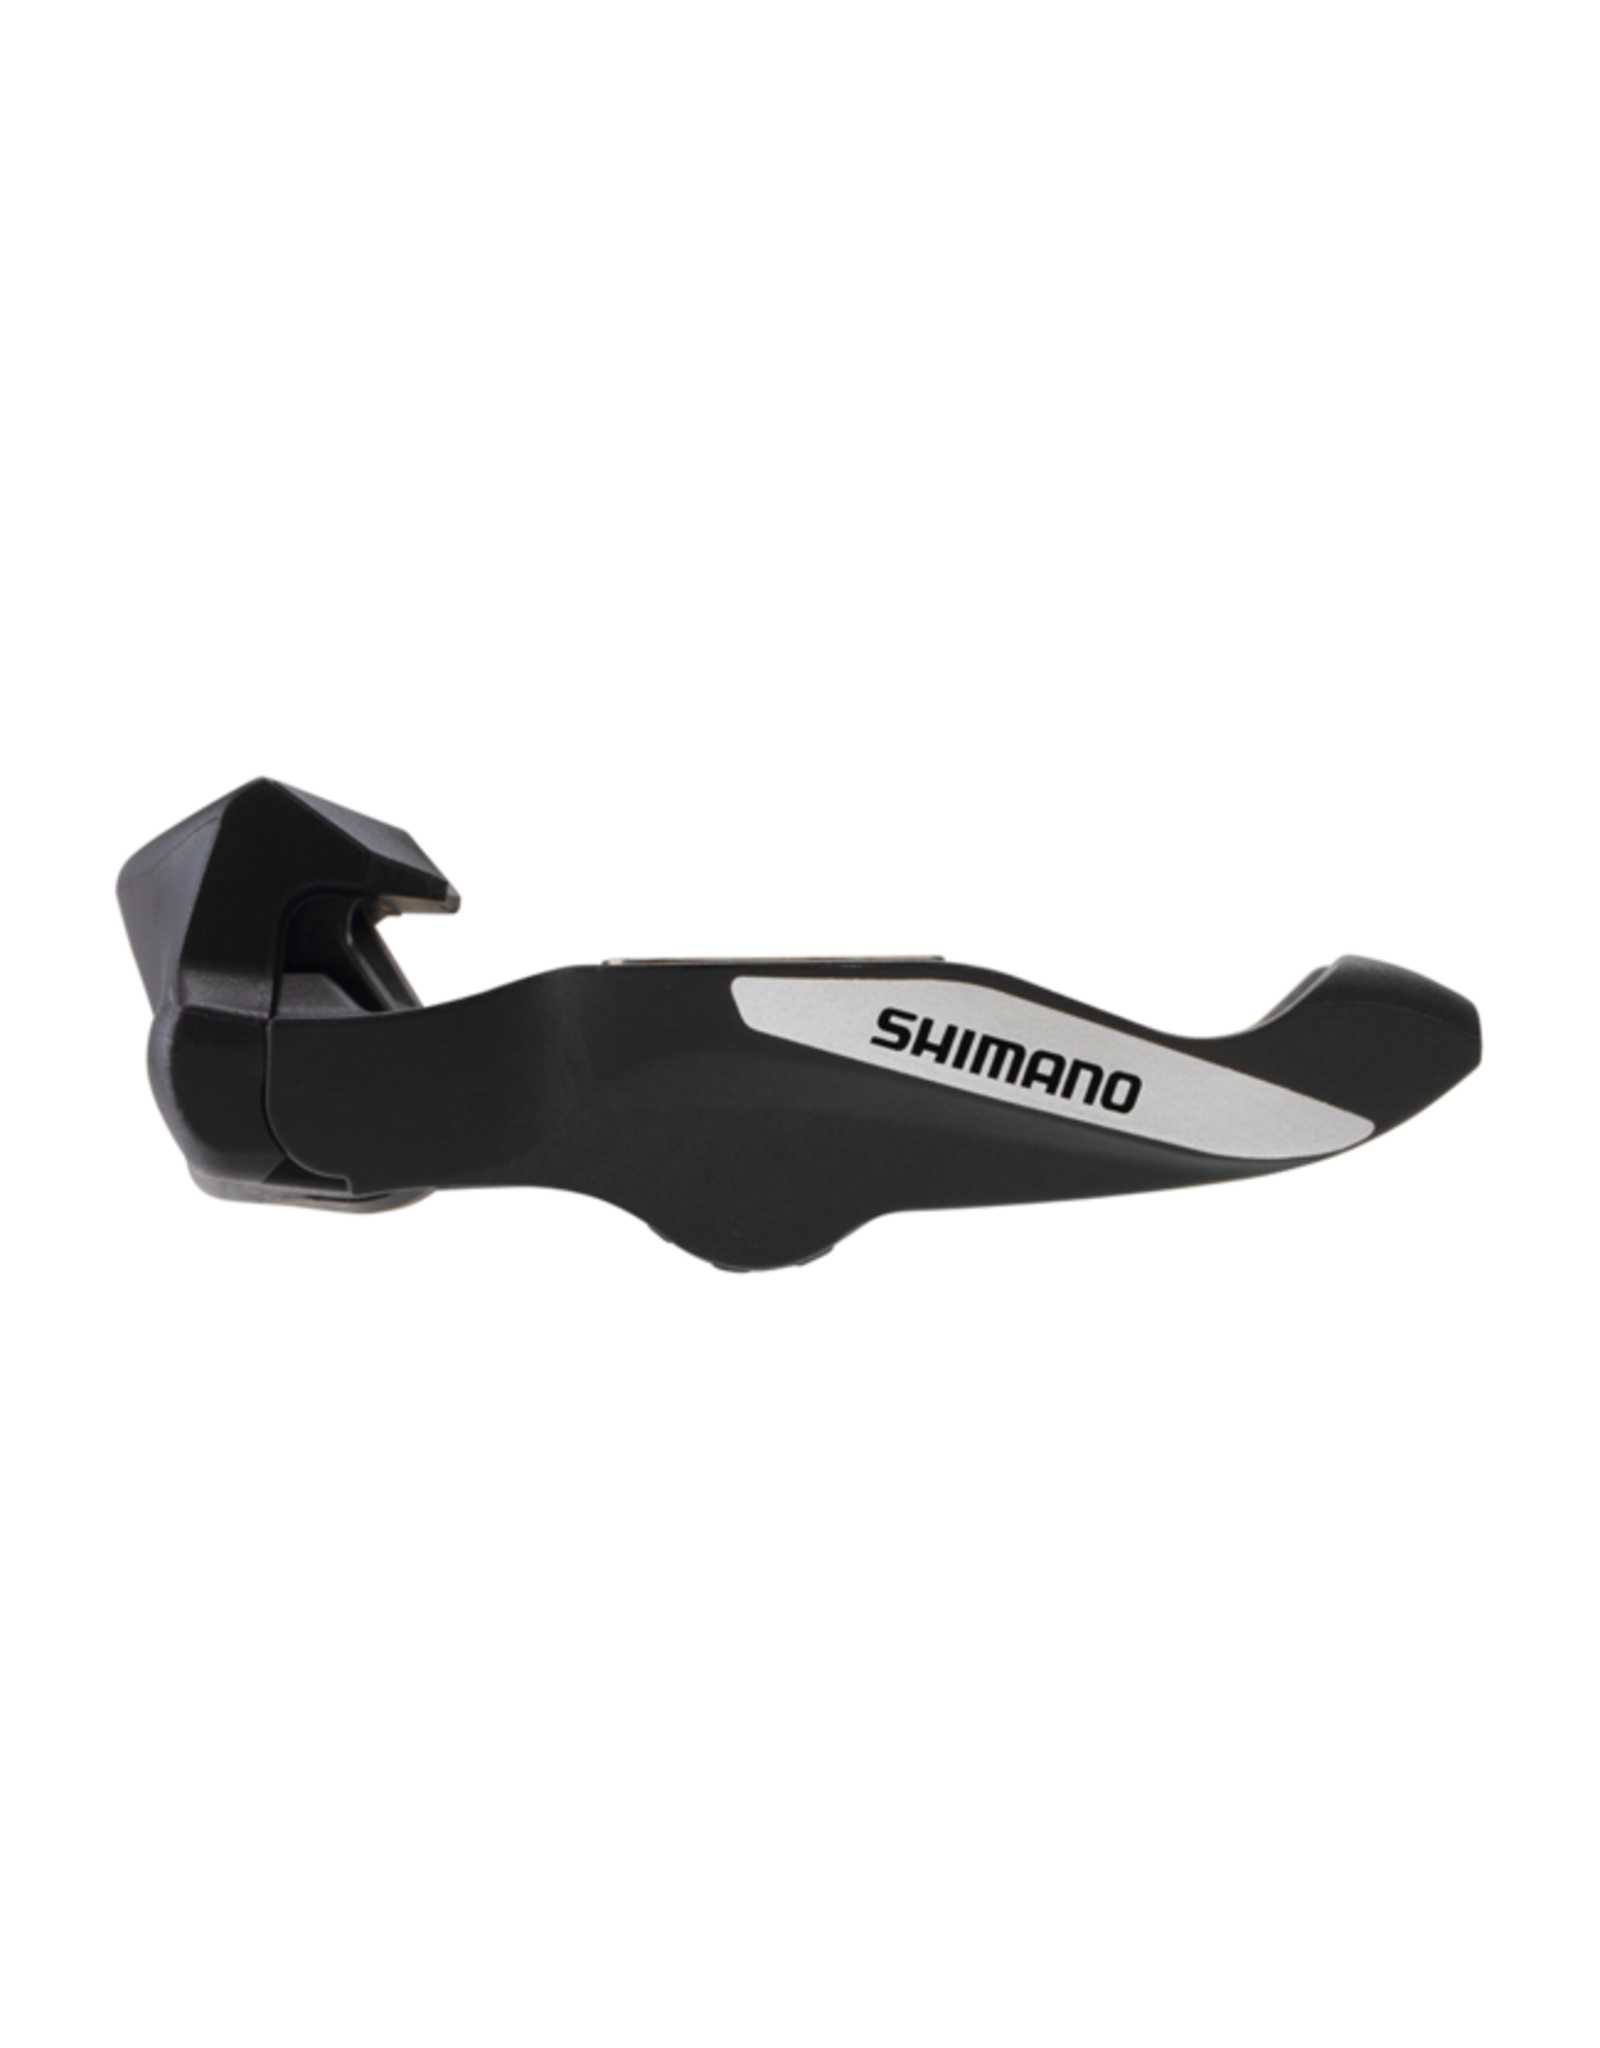 Shimano Shimano R550 pedals (SH-11 cleats)